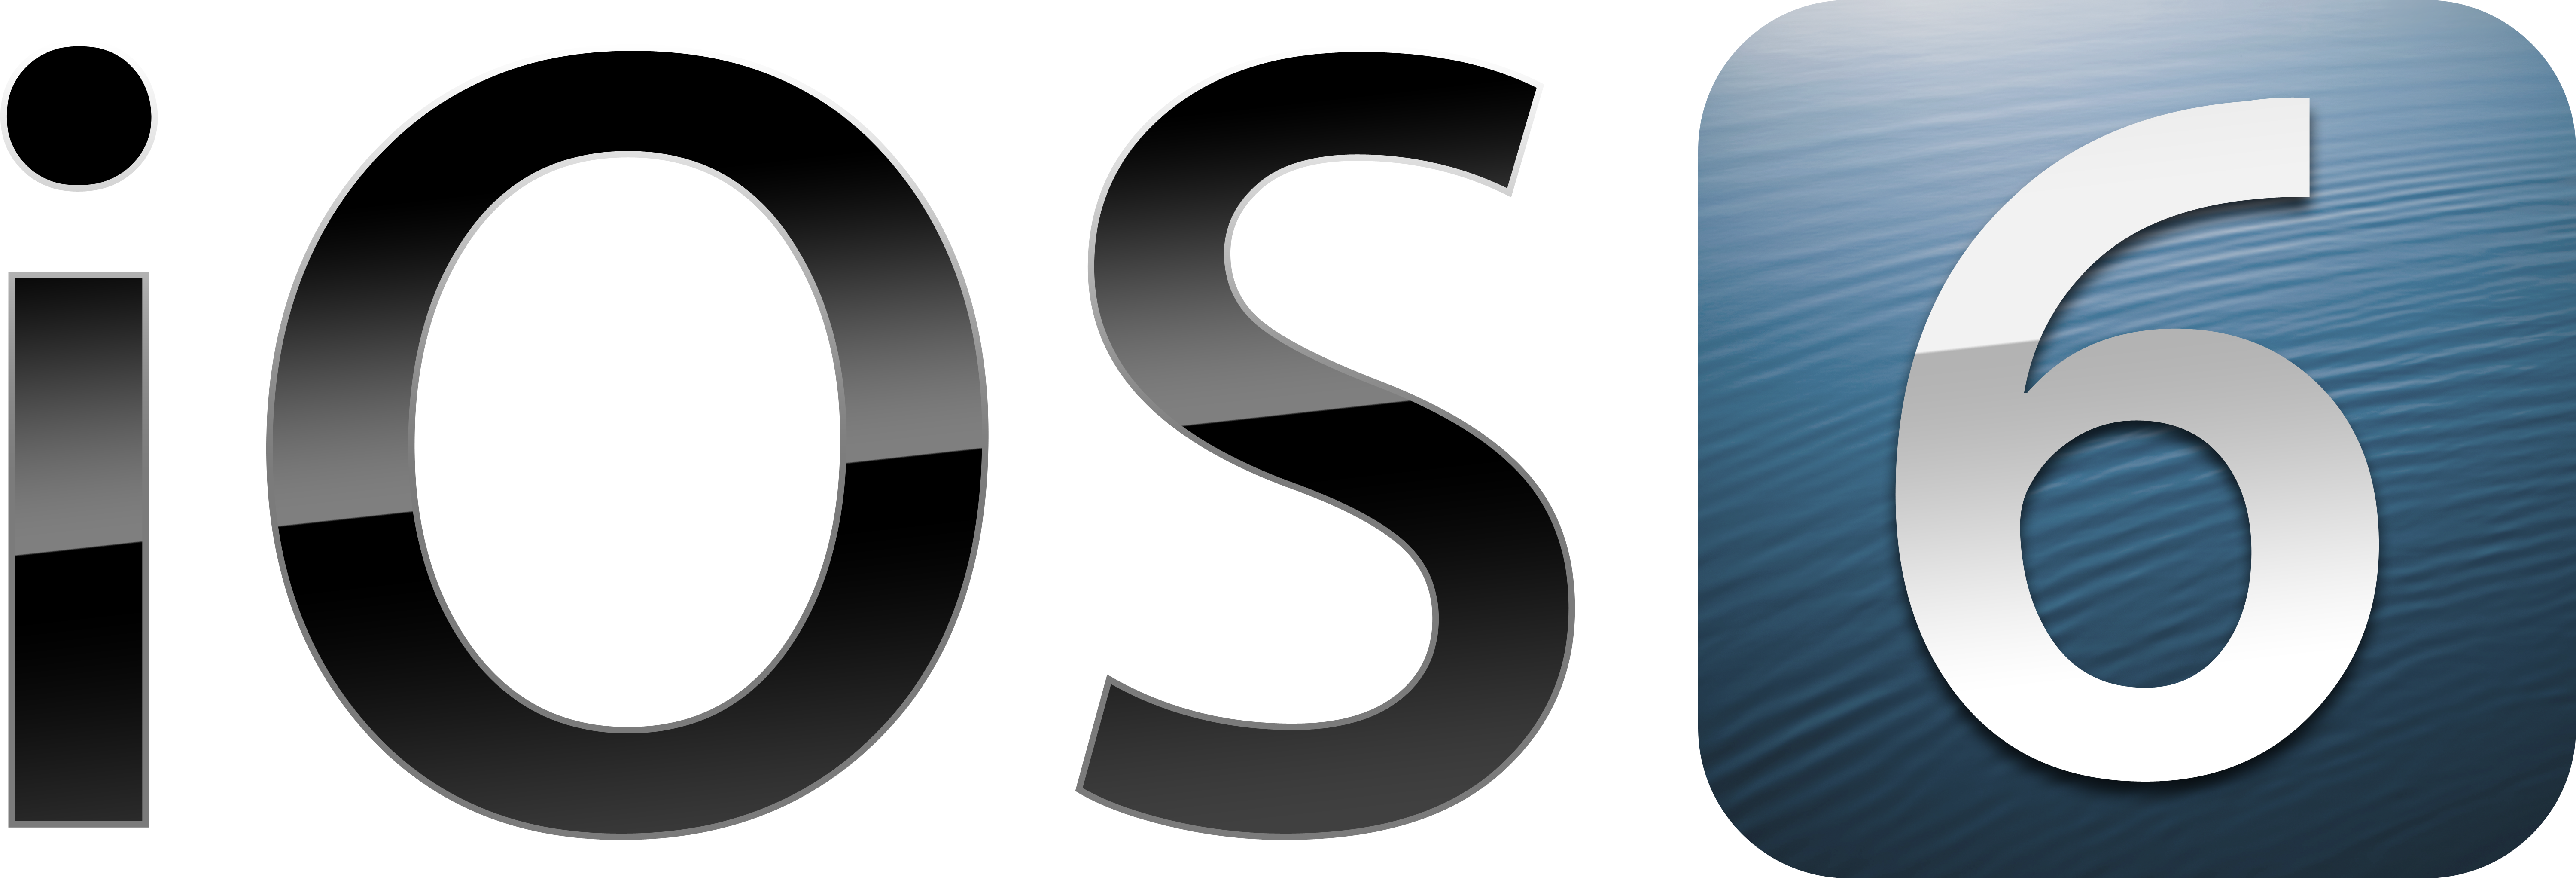 Apple classic logo vector dow